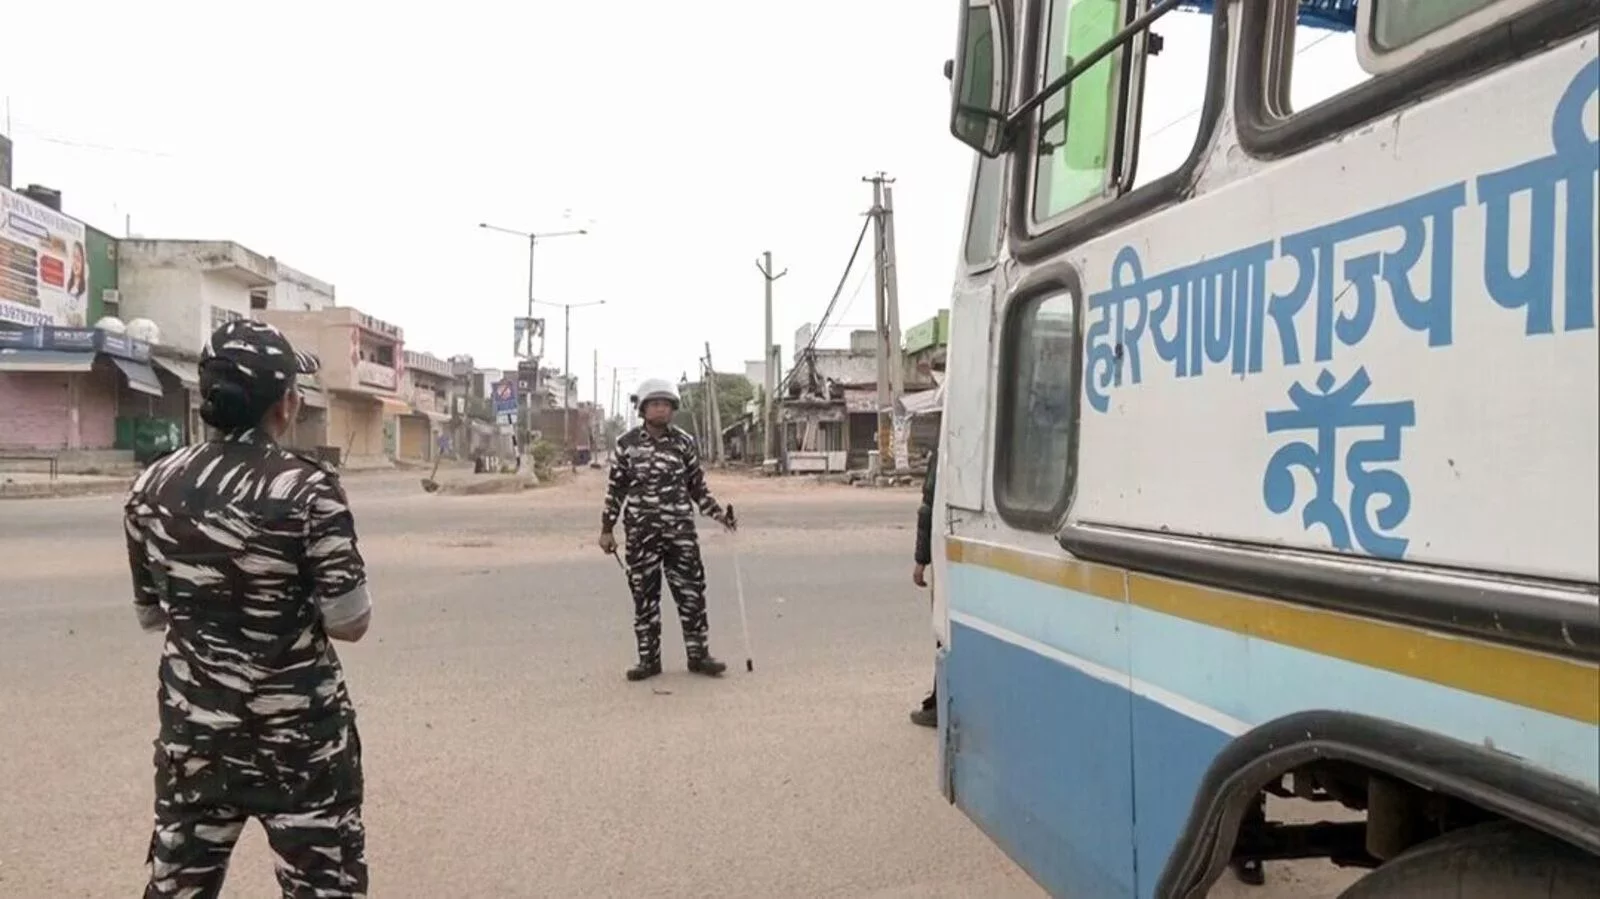 Two-Day Digital Shutdown What's Happening in Nuh, Haryana